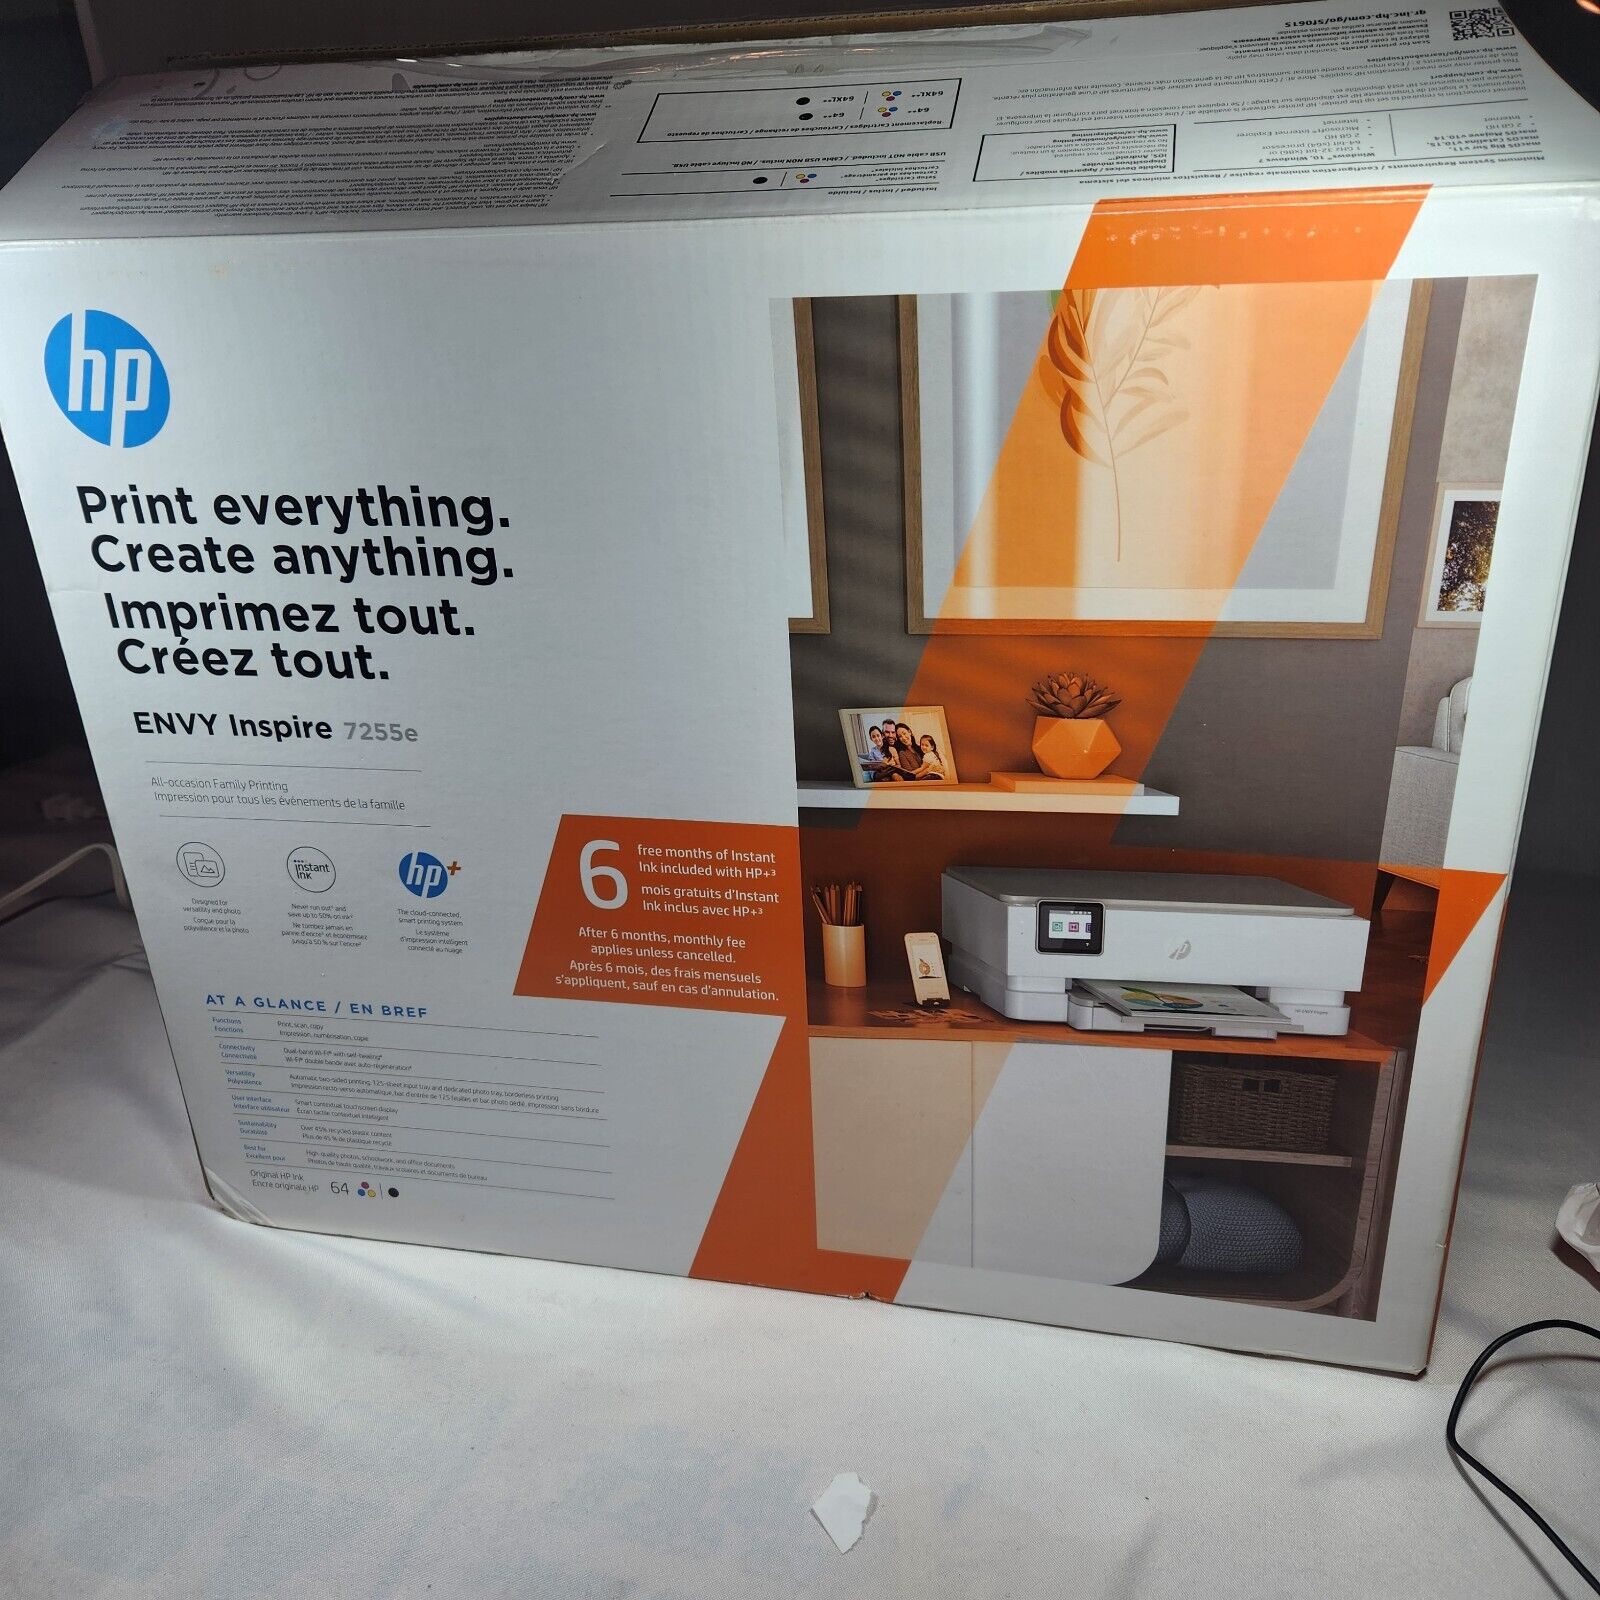 HP ENVY Inspire 7255e All-in-One Inkjet Printer, Color Mobile Print, Copy, Scan